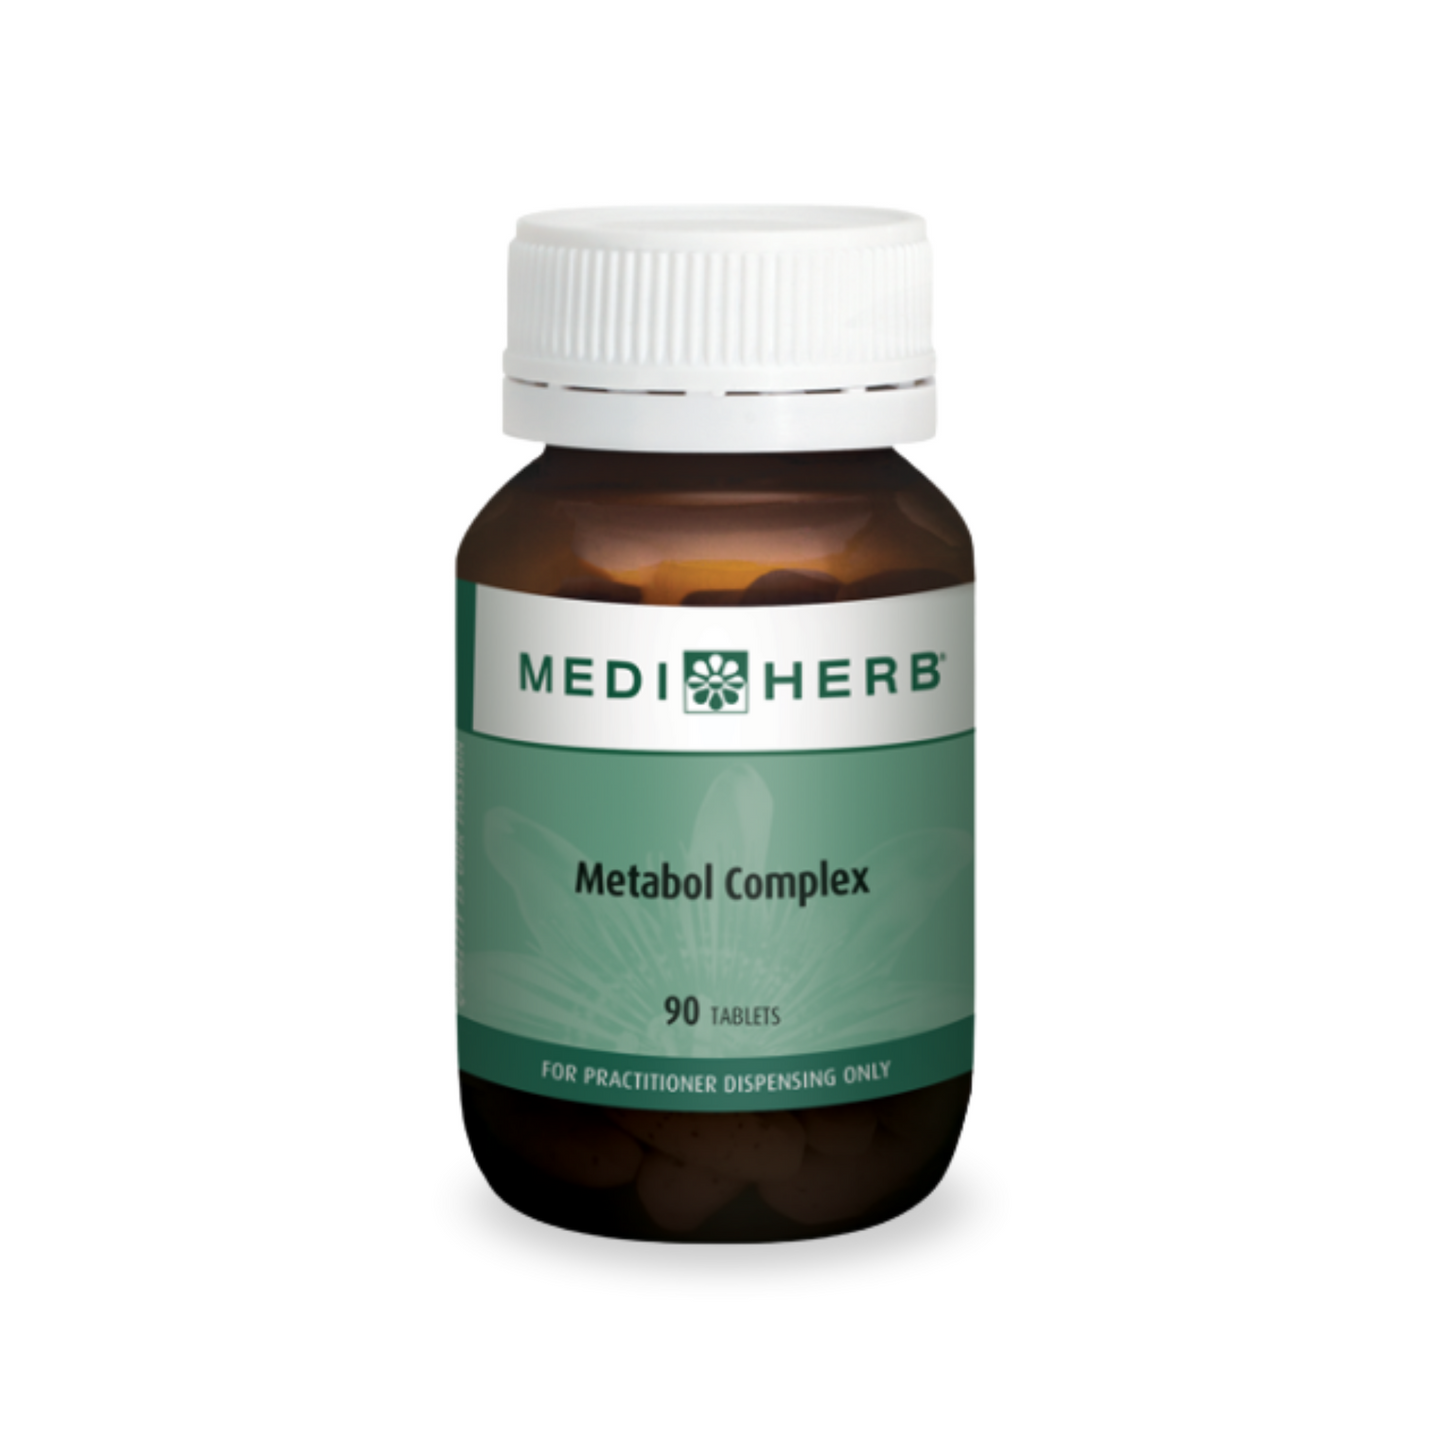 MediHerb Metabol Complex 90 Tablets